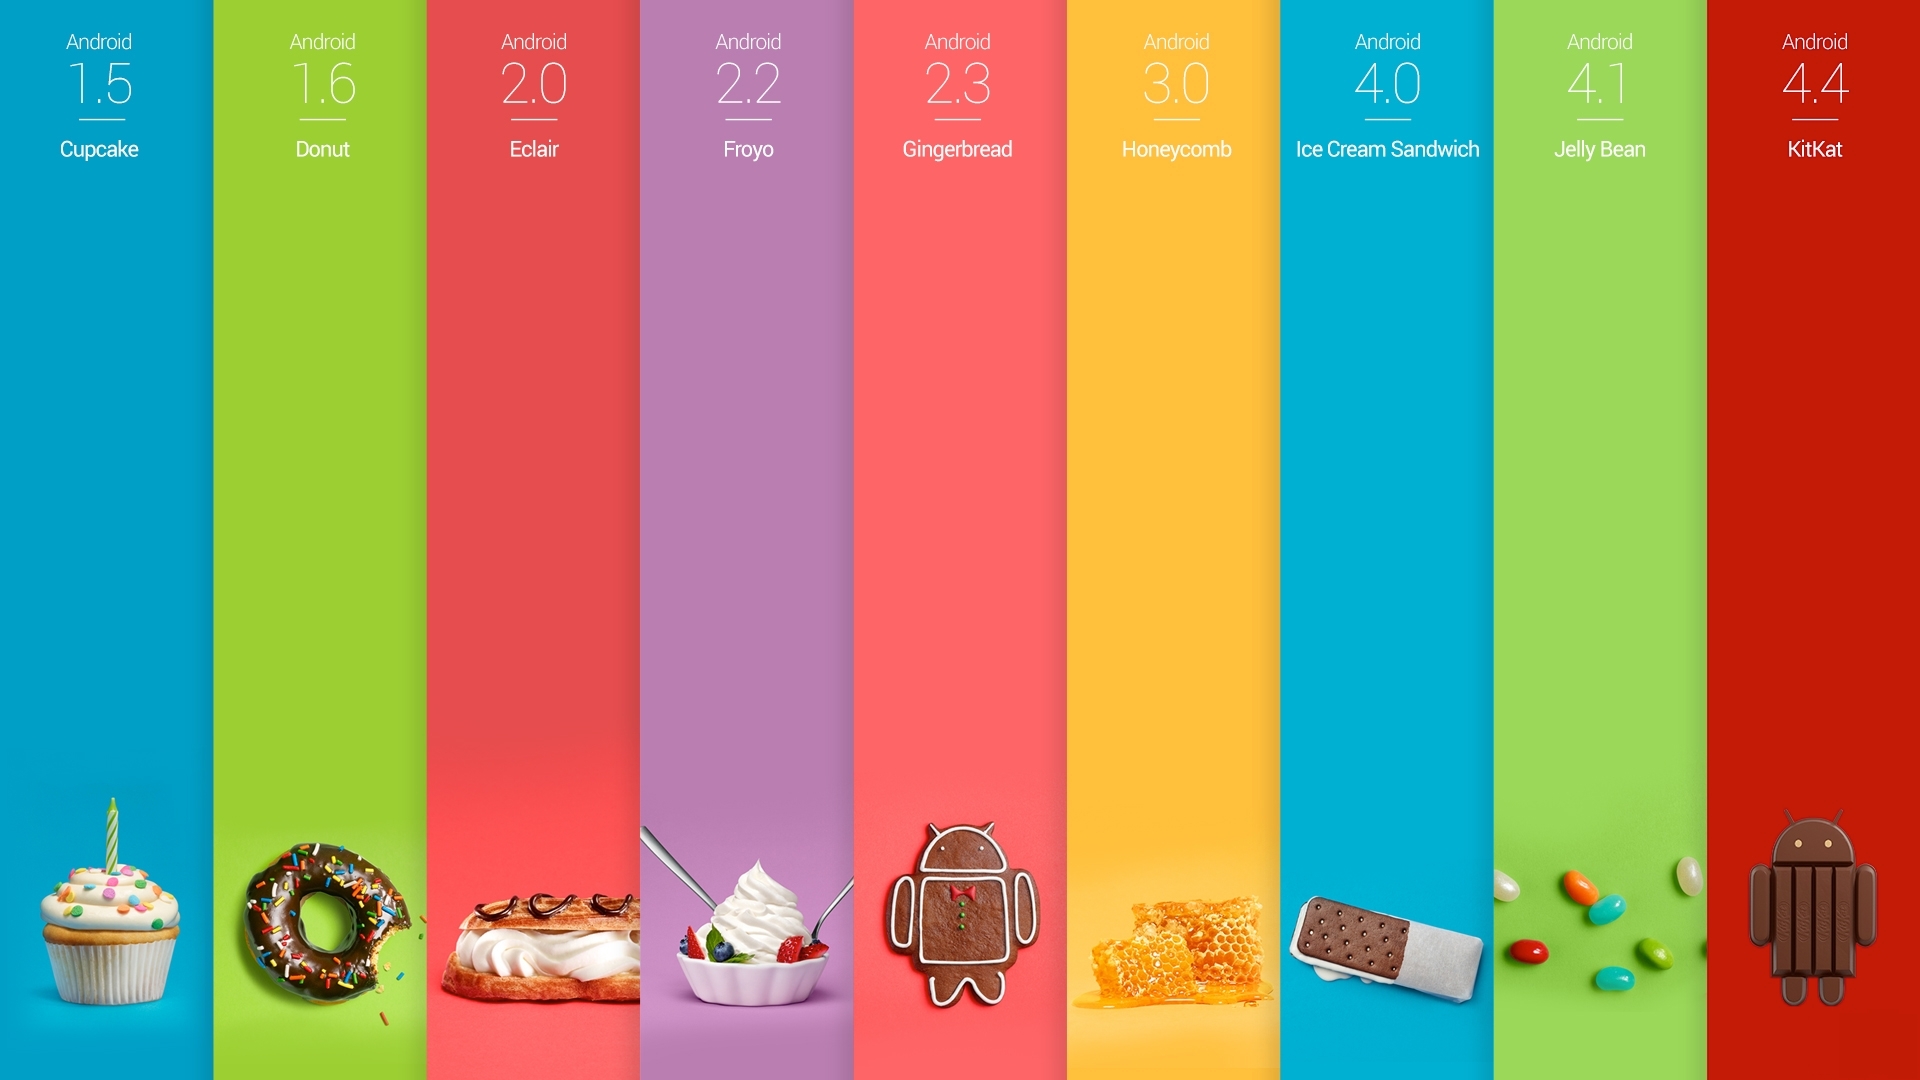 android 2017 wallpaper,grafikdesign